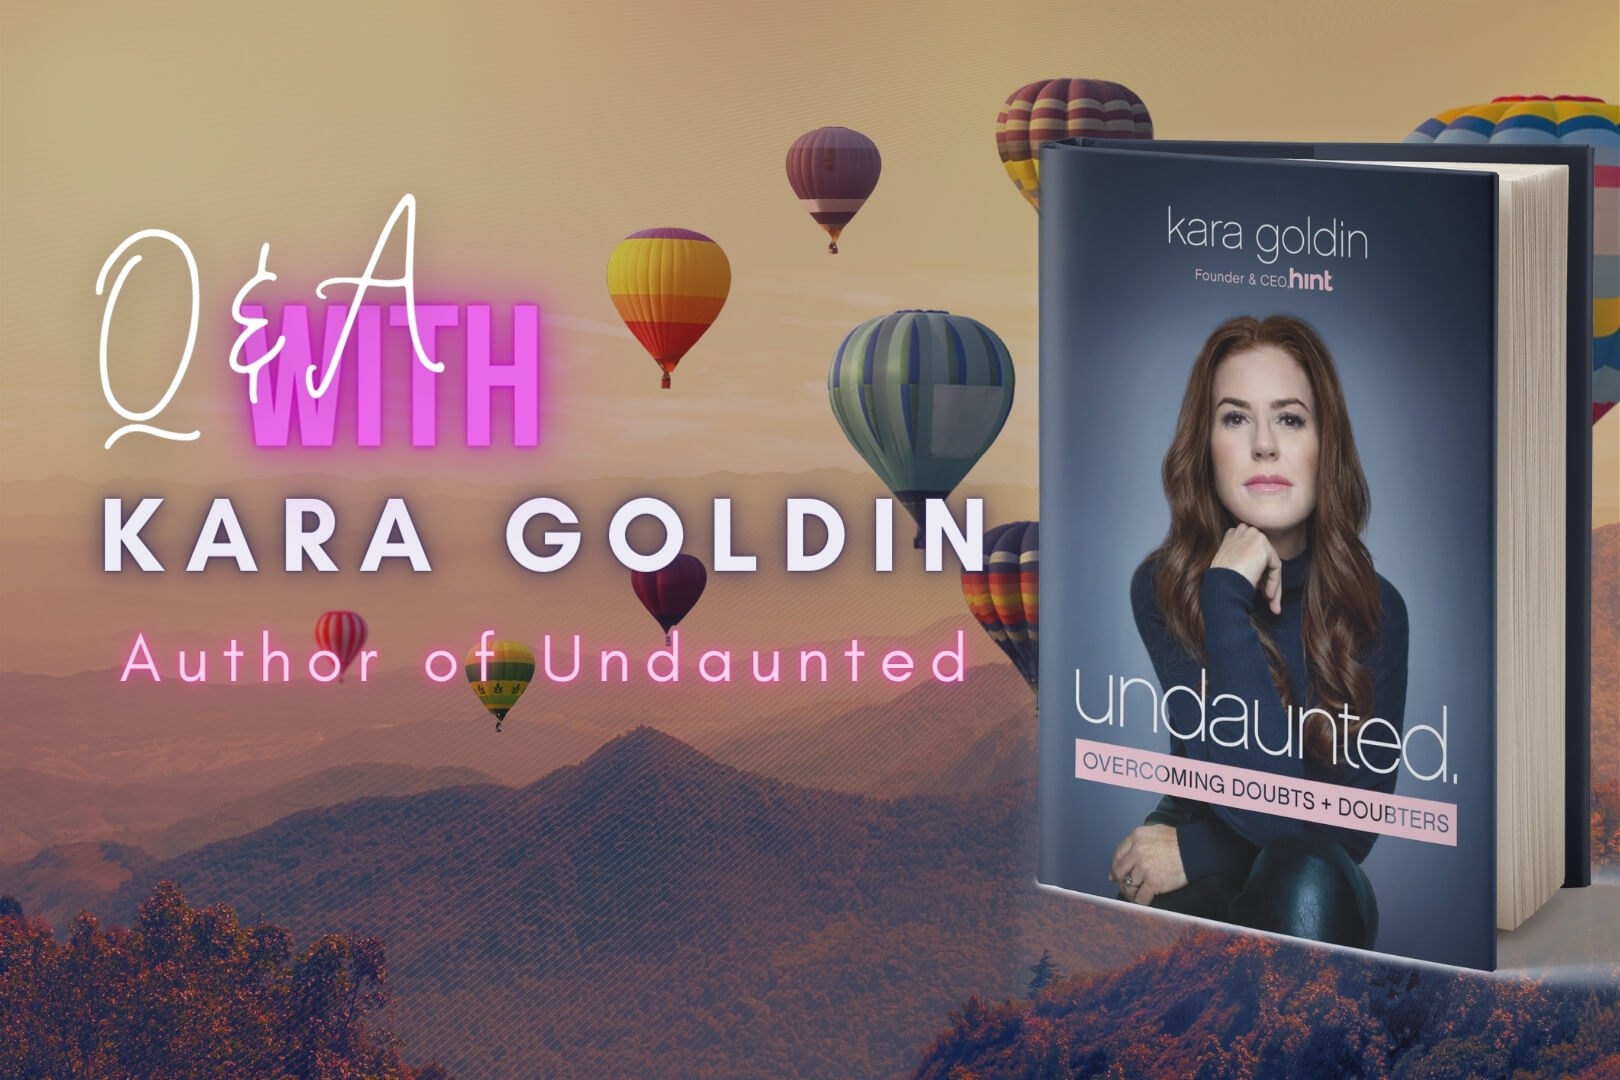 Q&A with Kara Goldin, Author of Undaunted